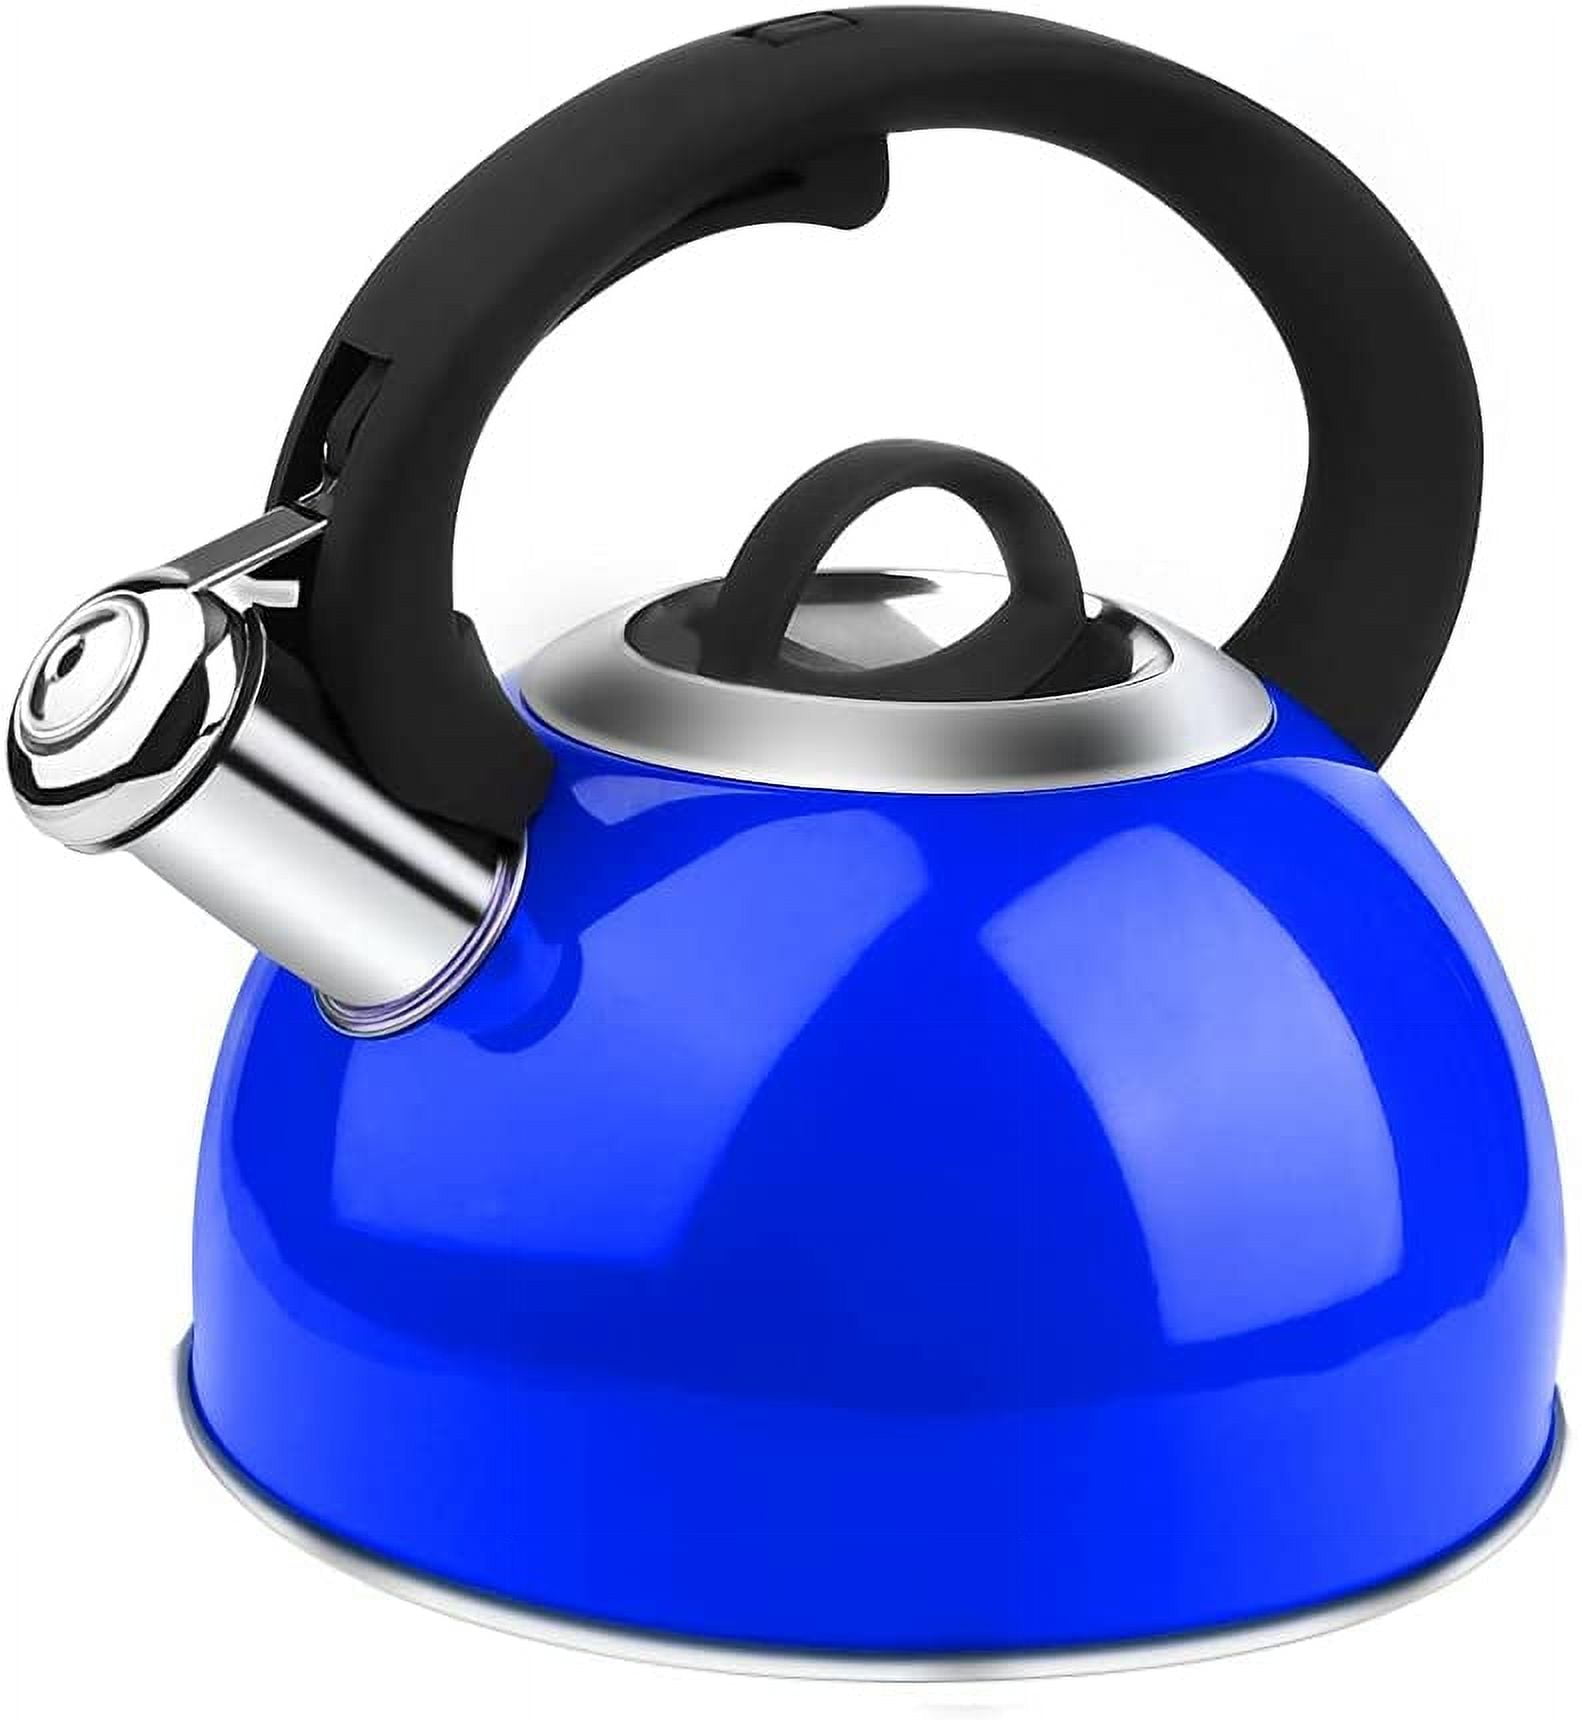 Stovetop Whistling Tea Kettle 3 Liter (3-Quart) Classic Teapot Induction  Compatible-Blue 2409